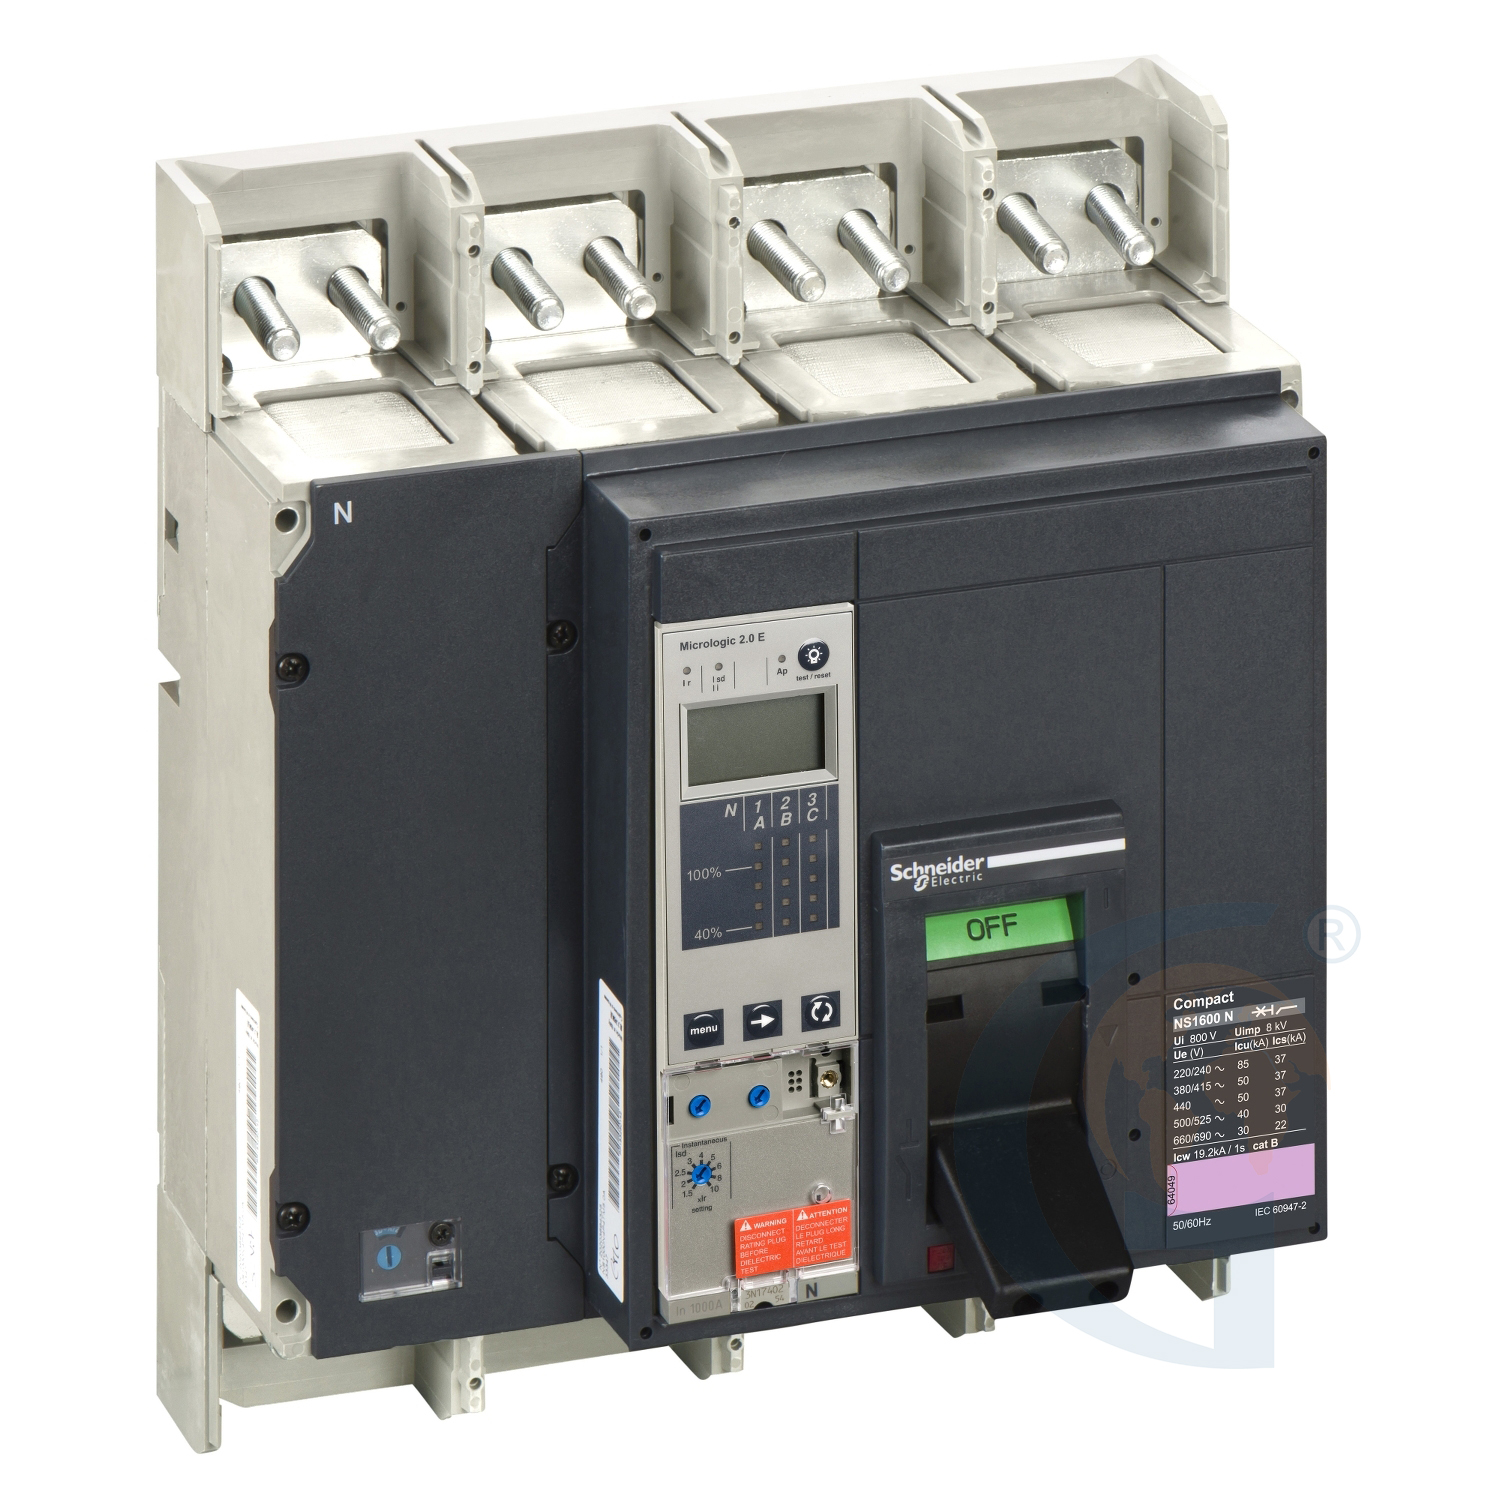 Schneider Electric 34418 circuit breaker Compact NS1600N – Micrologic 2.0 E – 1600 A – 4 poles 4t https://gesrepair.com/wp-content/uploads/2020/Schneider/Schneider_Electric_34418_.jpg